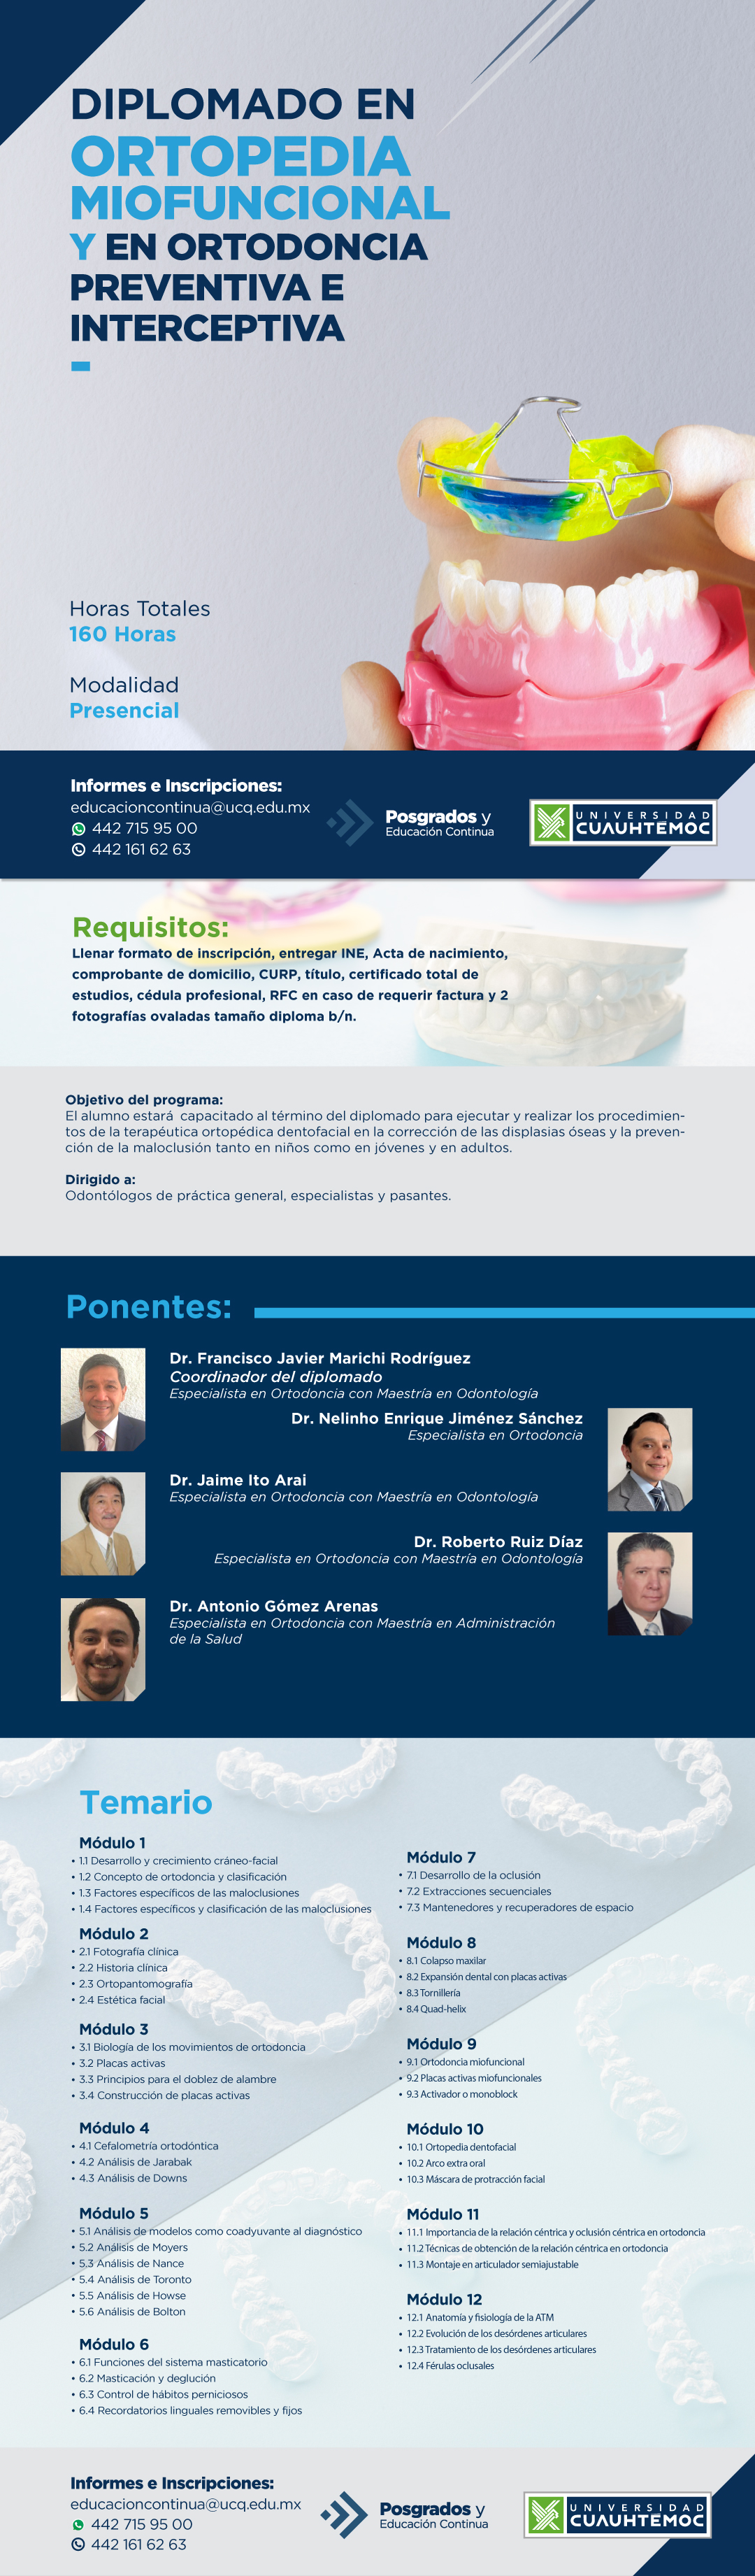 Diplomado en Ortopedia Miofuncional en Ortodoncia Preventiva e Interceptiva